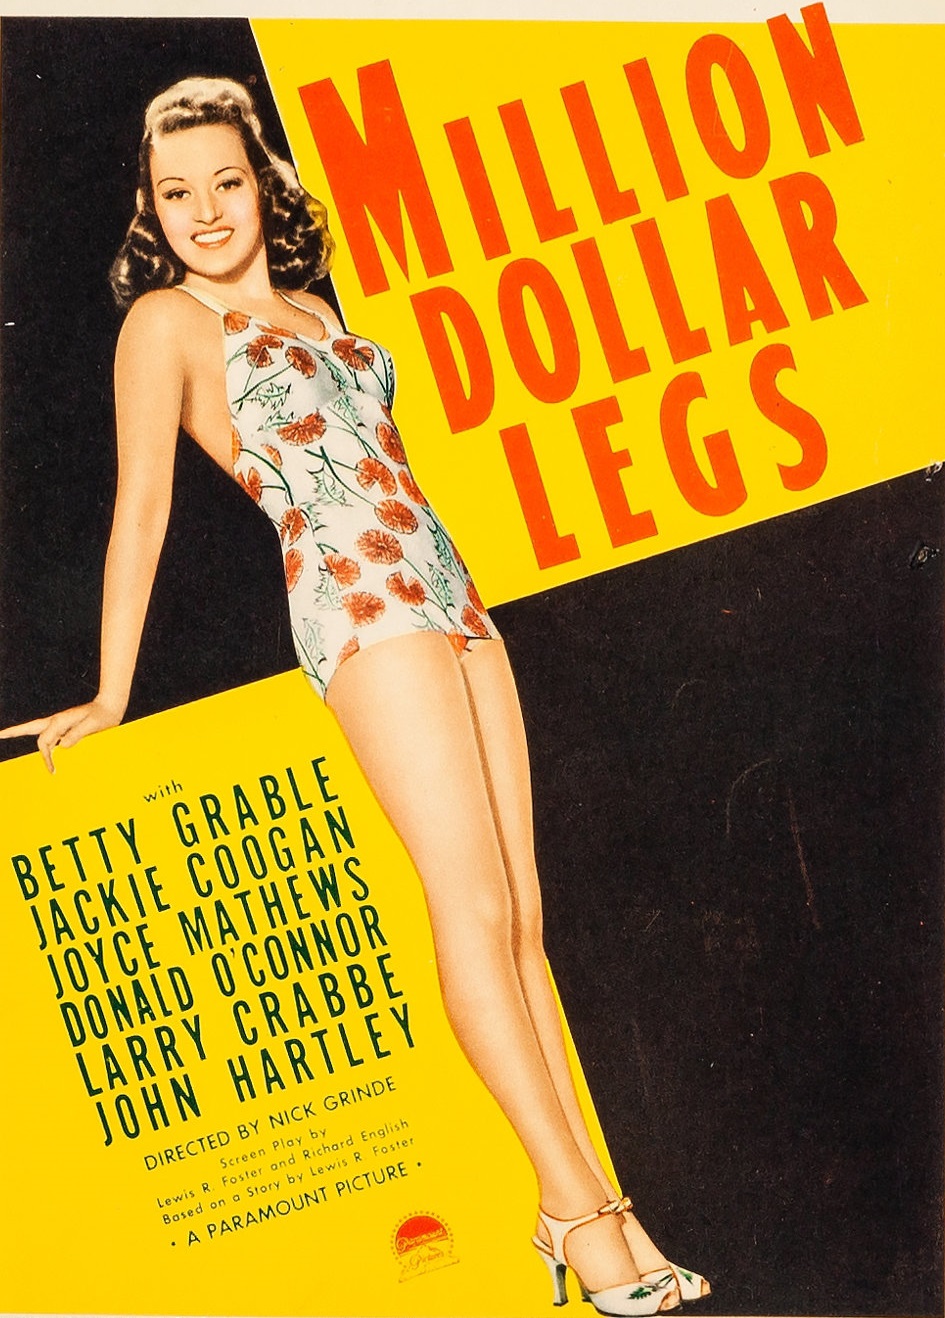 Million Dollar Legs (1939) starring Betty Grable on DVD on DVD